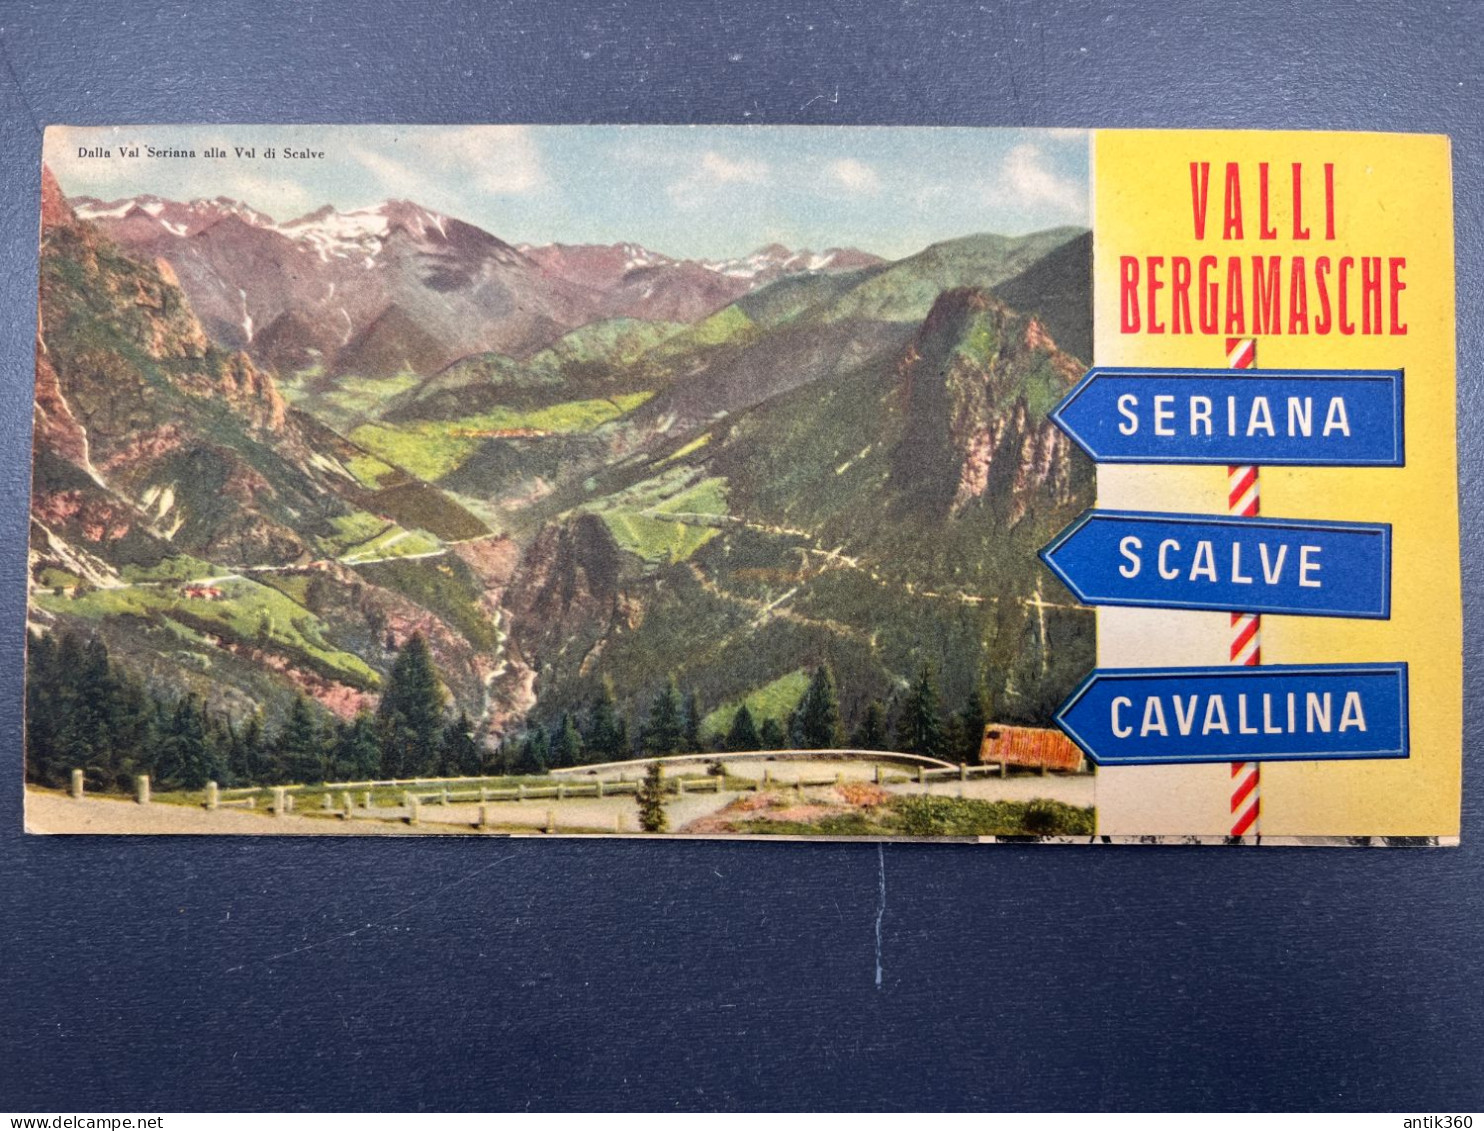 Ancien Dépliant Touristique Pop-Up Valli Bergamasche Seriana Scalve Cavallina Italie - Toeristische Brochures